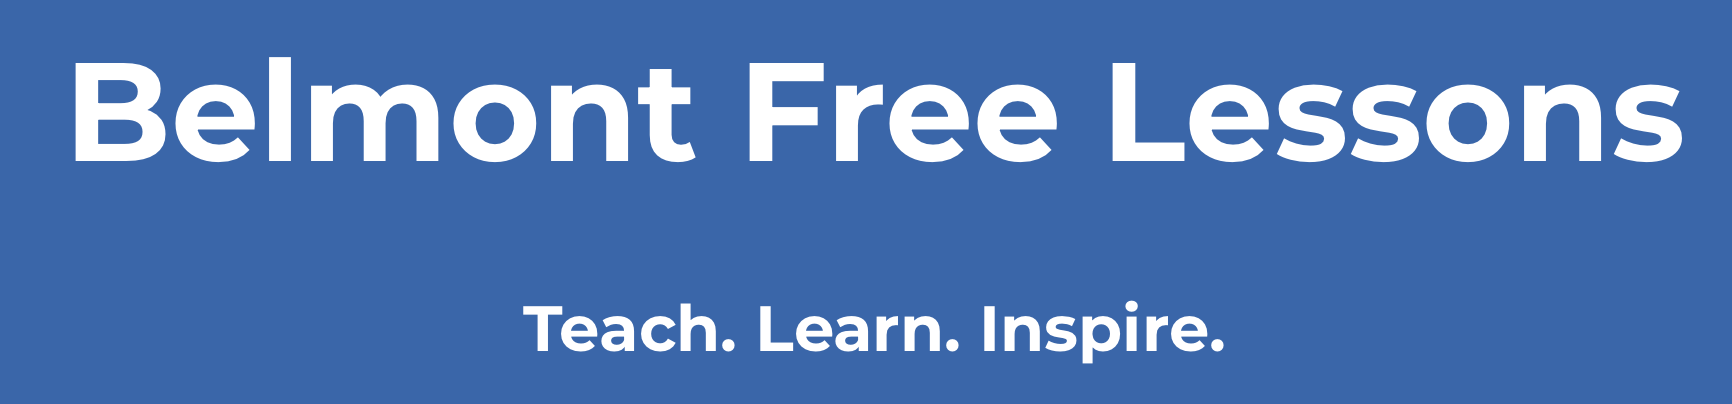 Belmont Free Lessons logo